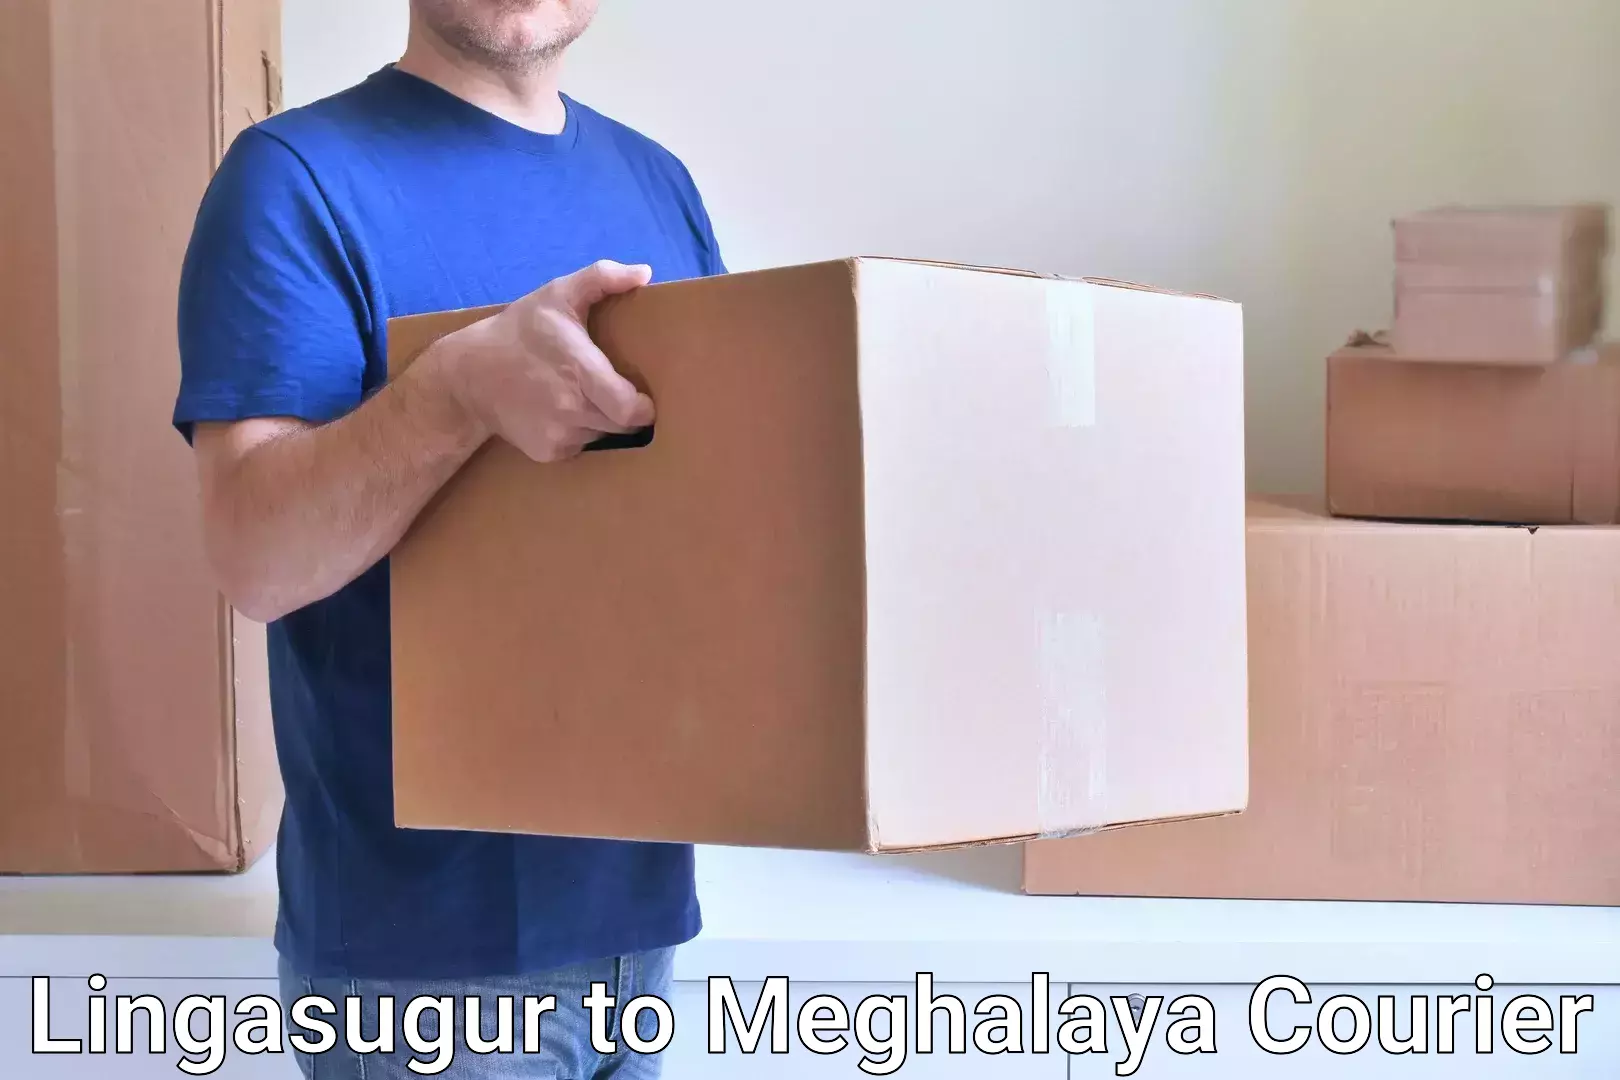 Efficient order fulfillment in Lingasugur to Meghalaya